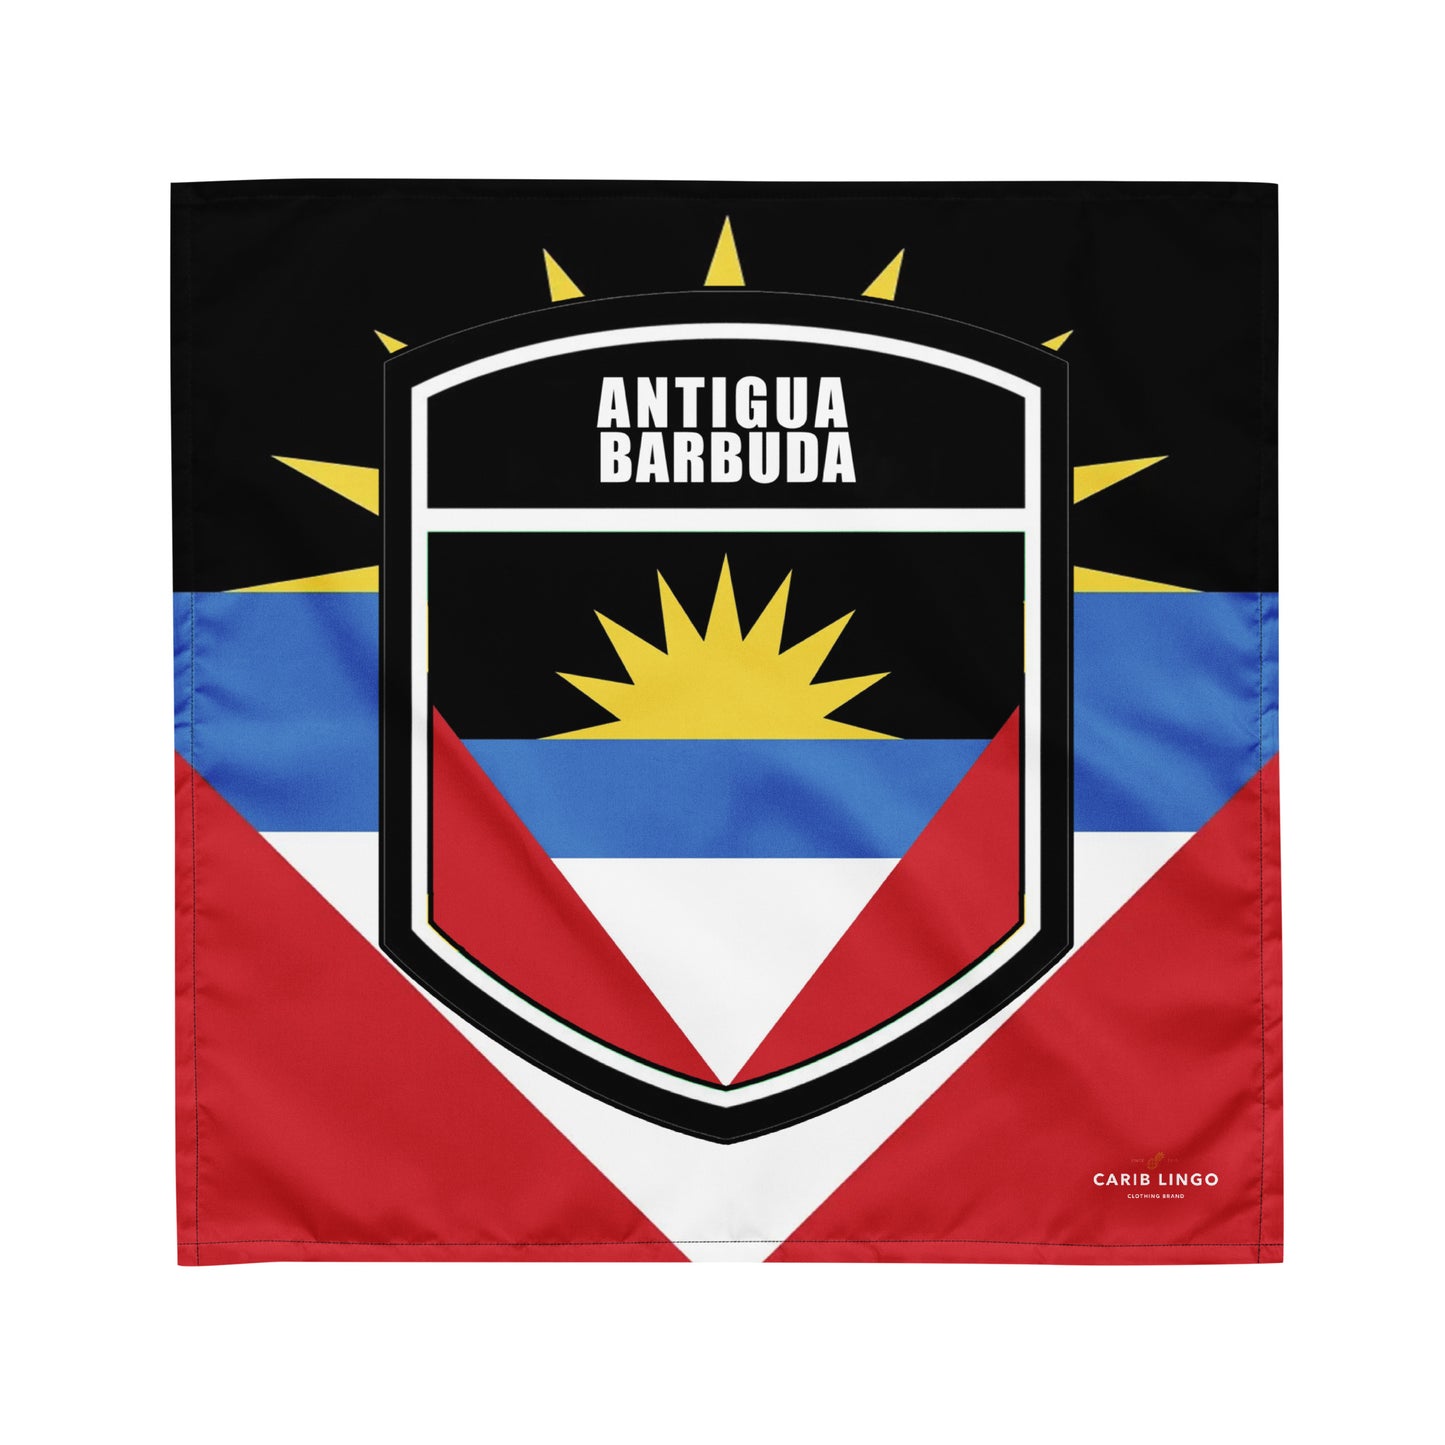 Antigua & Barbuda bandana